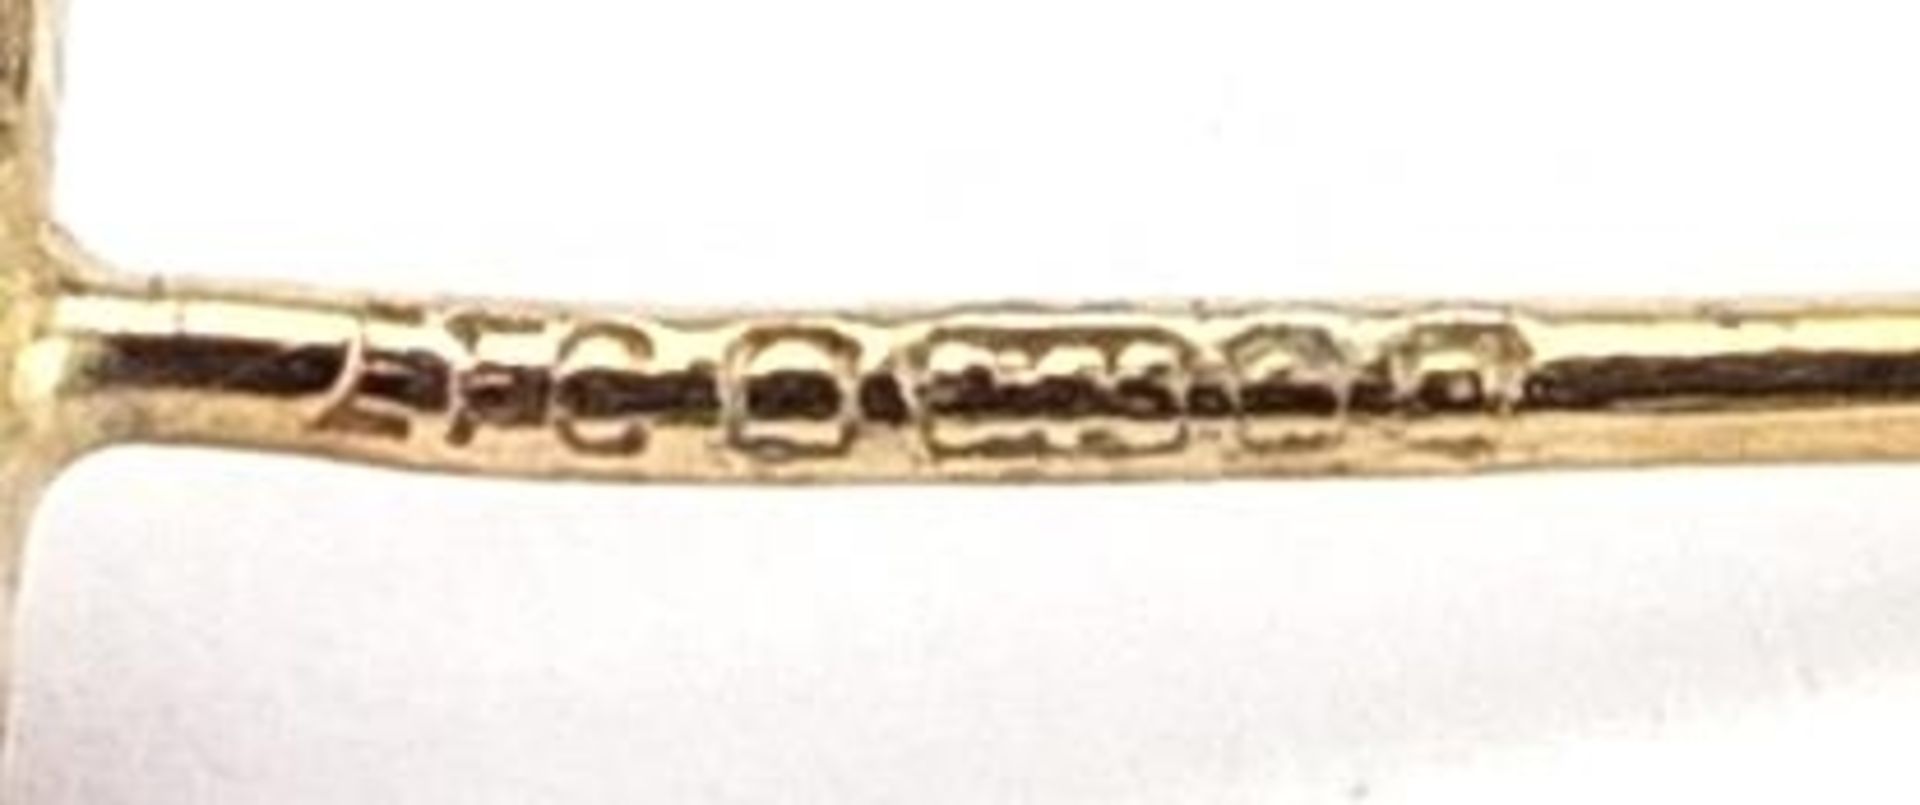 Pair of 9ct gold amethyst stud earrings, 7mm high, 1.6g - Image 2 of 3